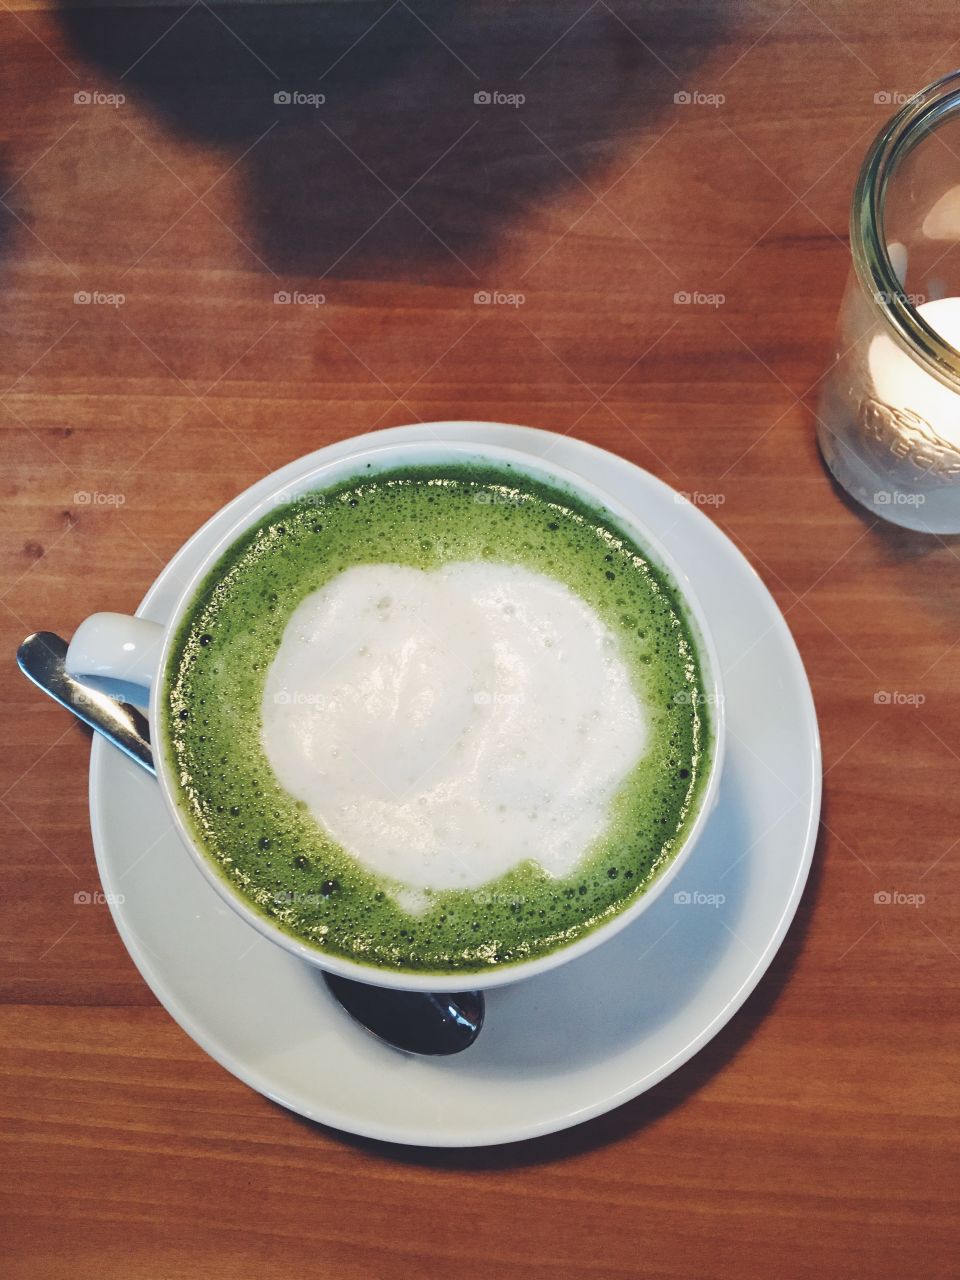 Green matcha latte